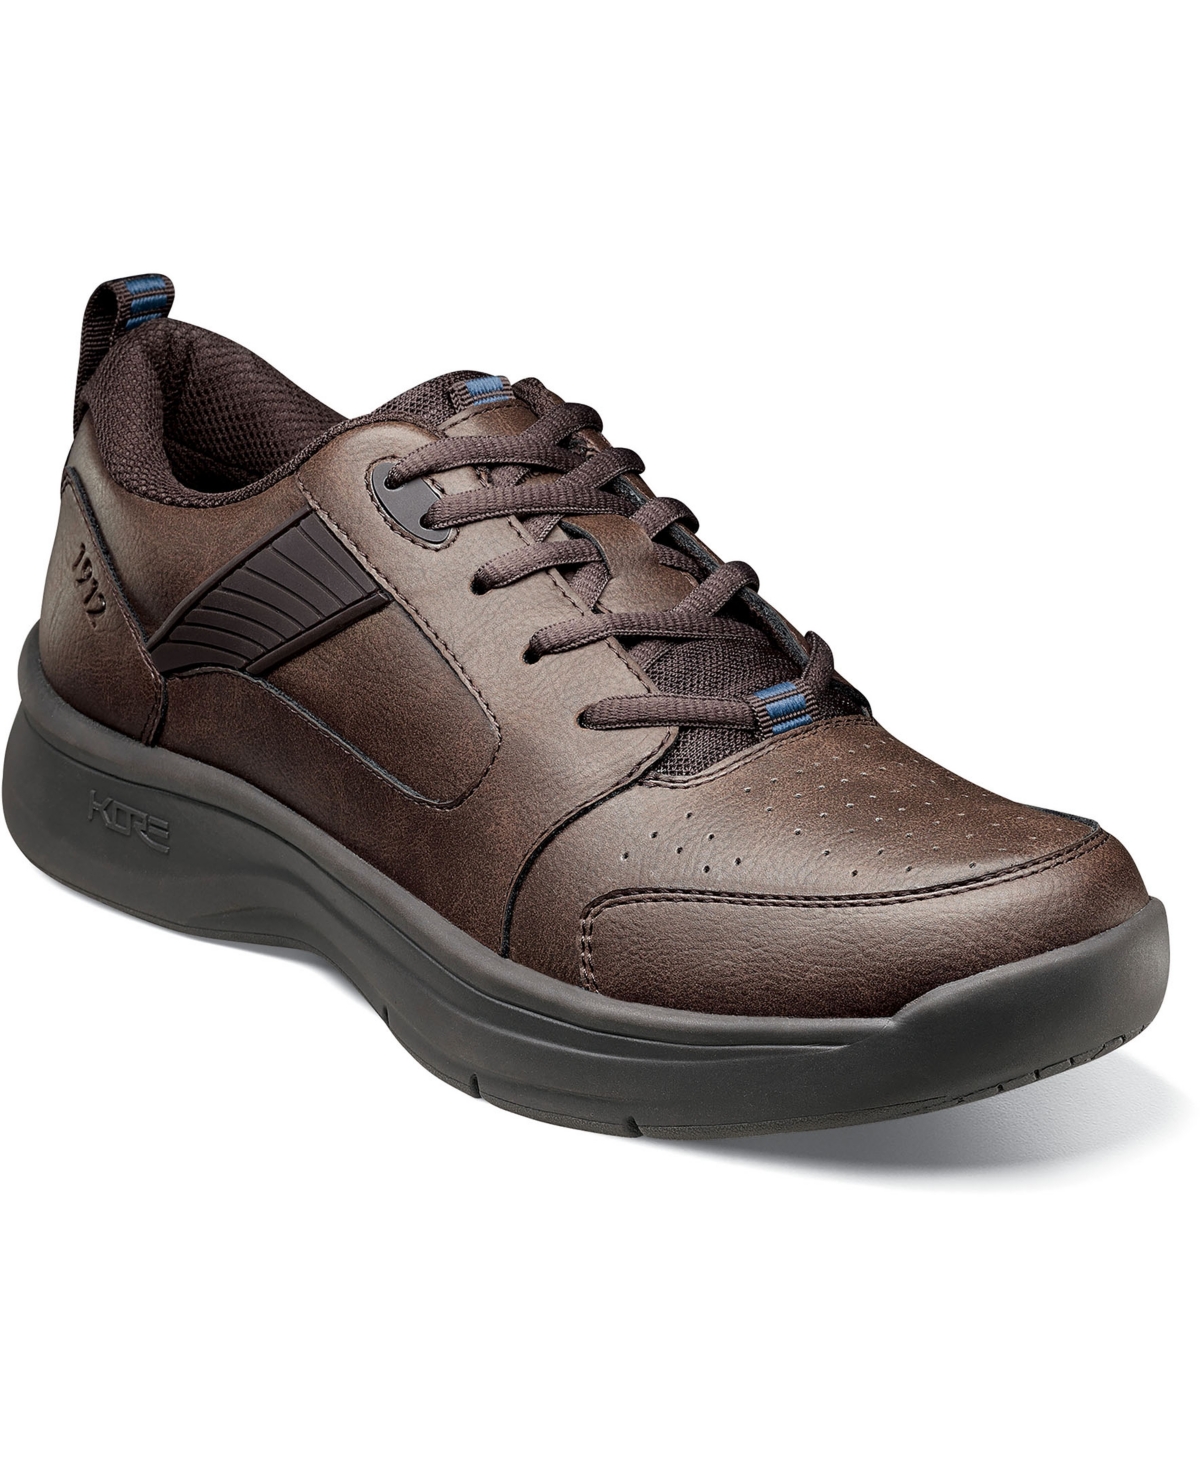 Men's Kore Elevate Moc Toe Oxford Shoes - Dark Brown